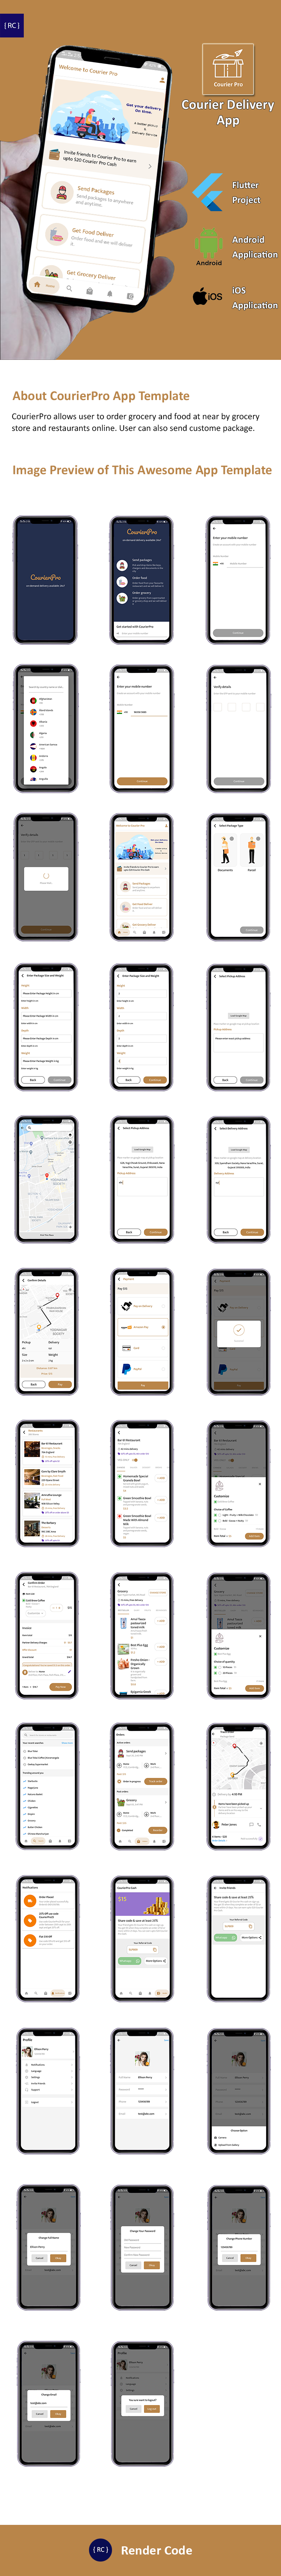 Courier Delivery Flutter App Template | 2 Apps | User App + Delivery App | CourierPro - 7